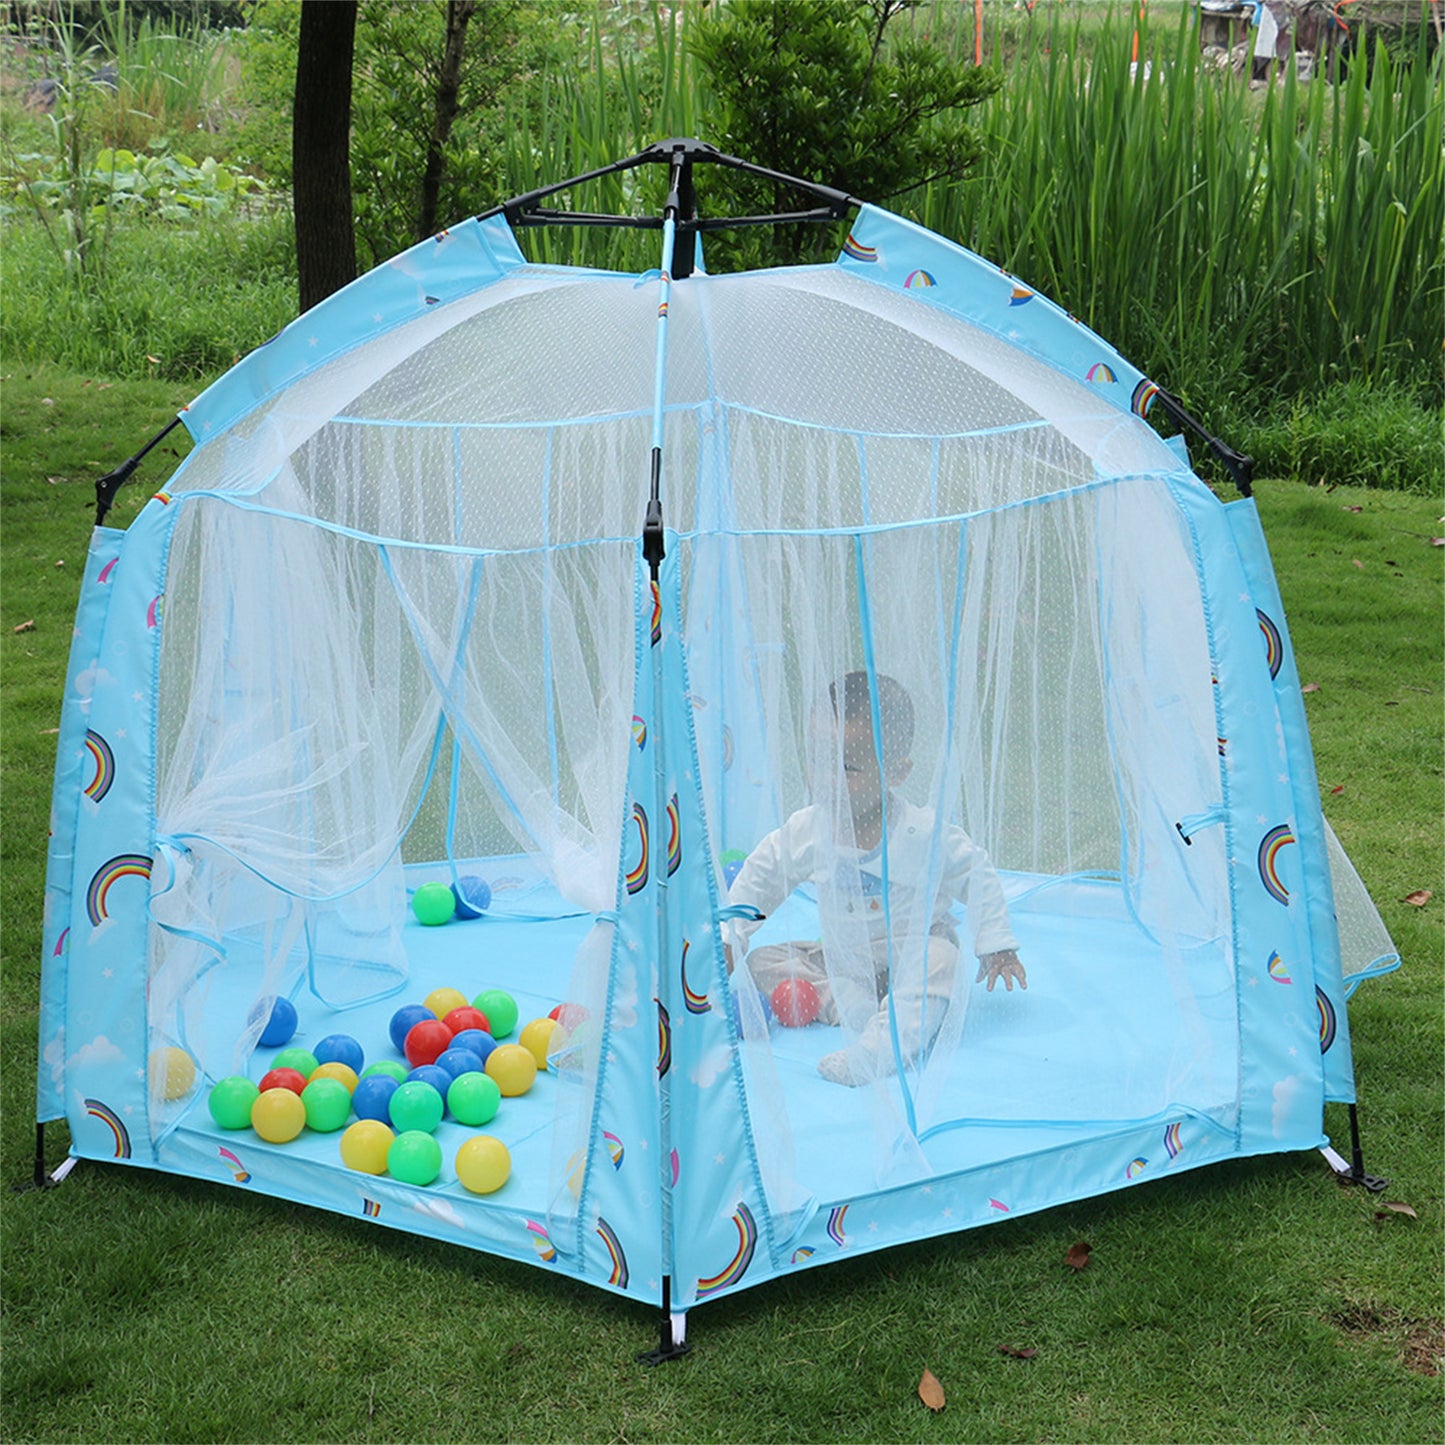 Single layer 2-3 person children's folding tent